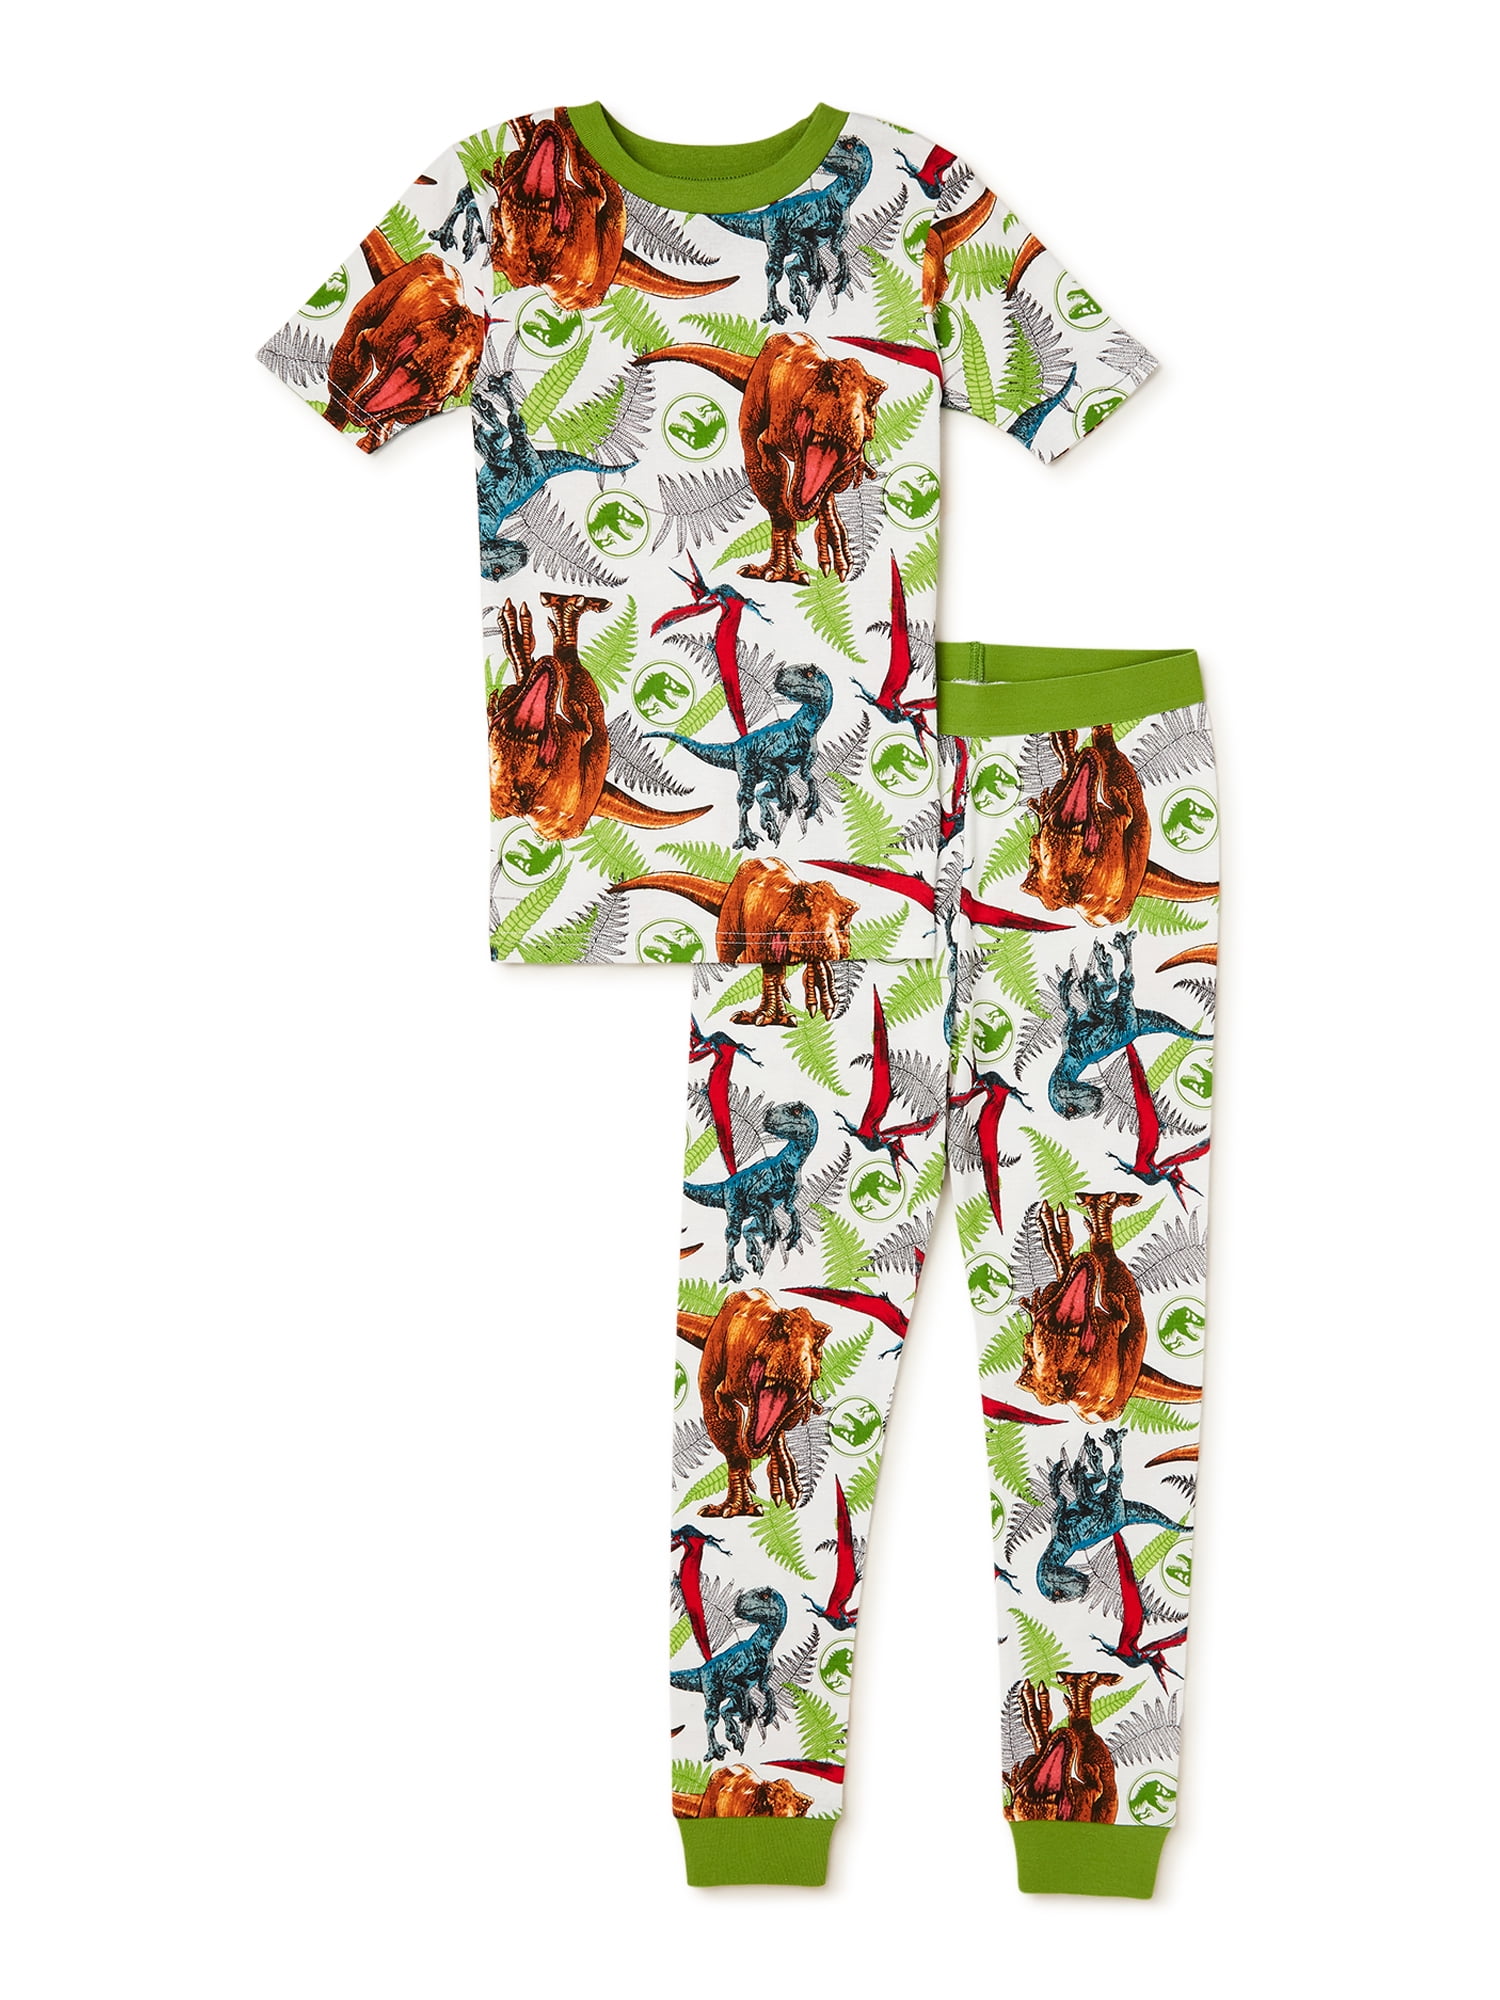 Size 3T to 8 SpongeBob SquarePants Boy's Pajama Set,2 Piece PJ Set with Short Sleeve Top with Short Leg Bottoms,100% Cotton